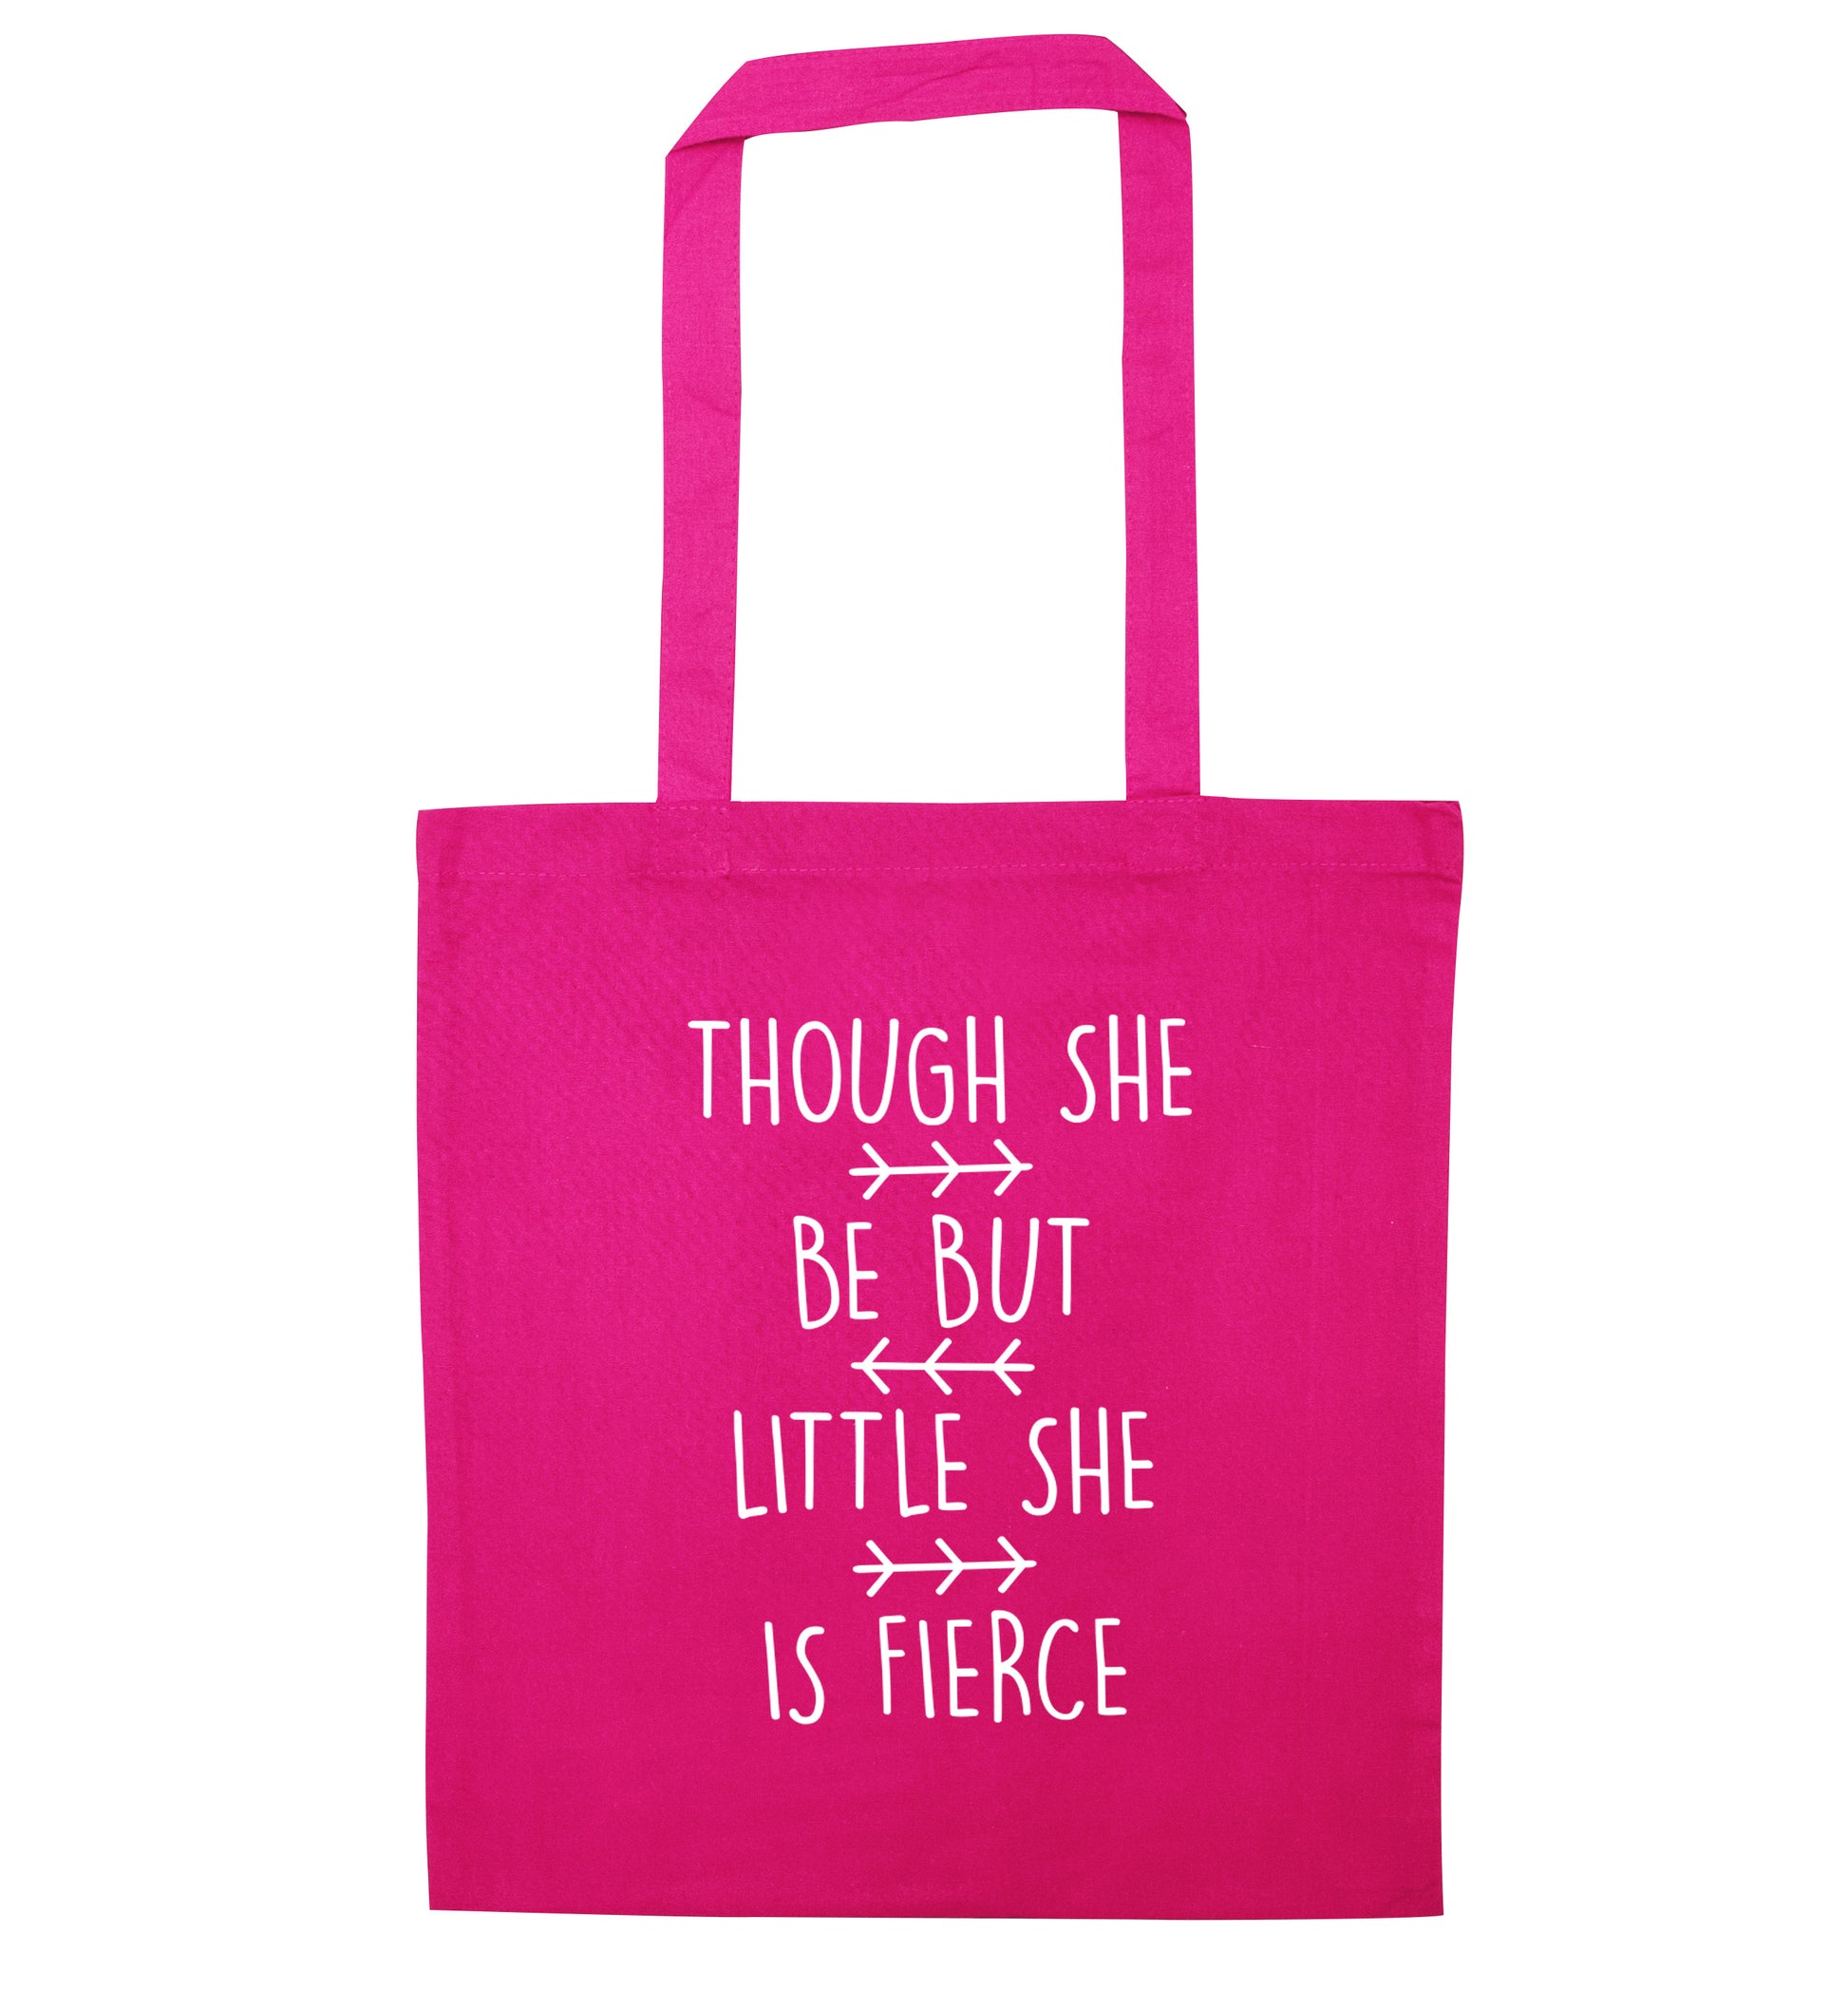 Though she be little she be fierce pink tote bag